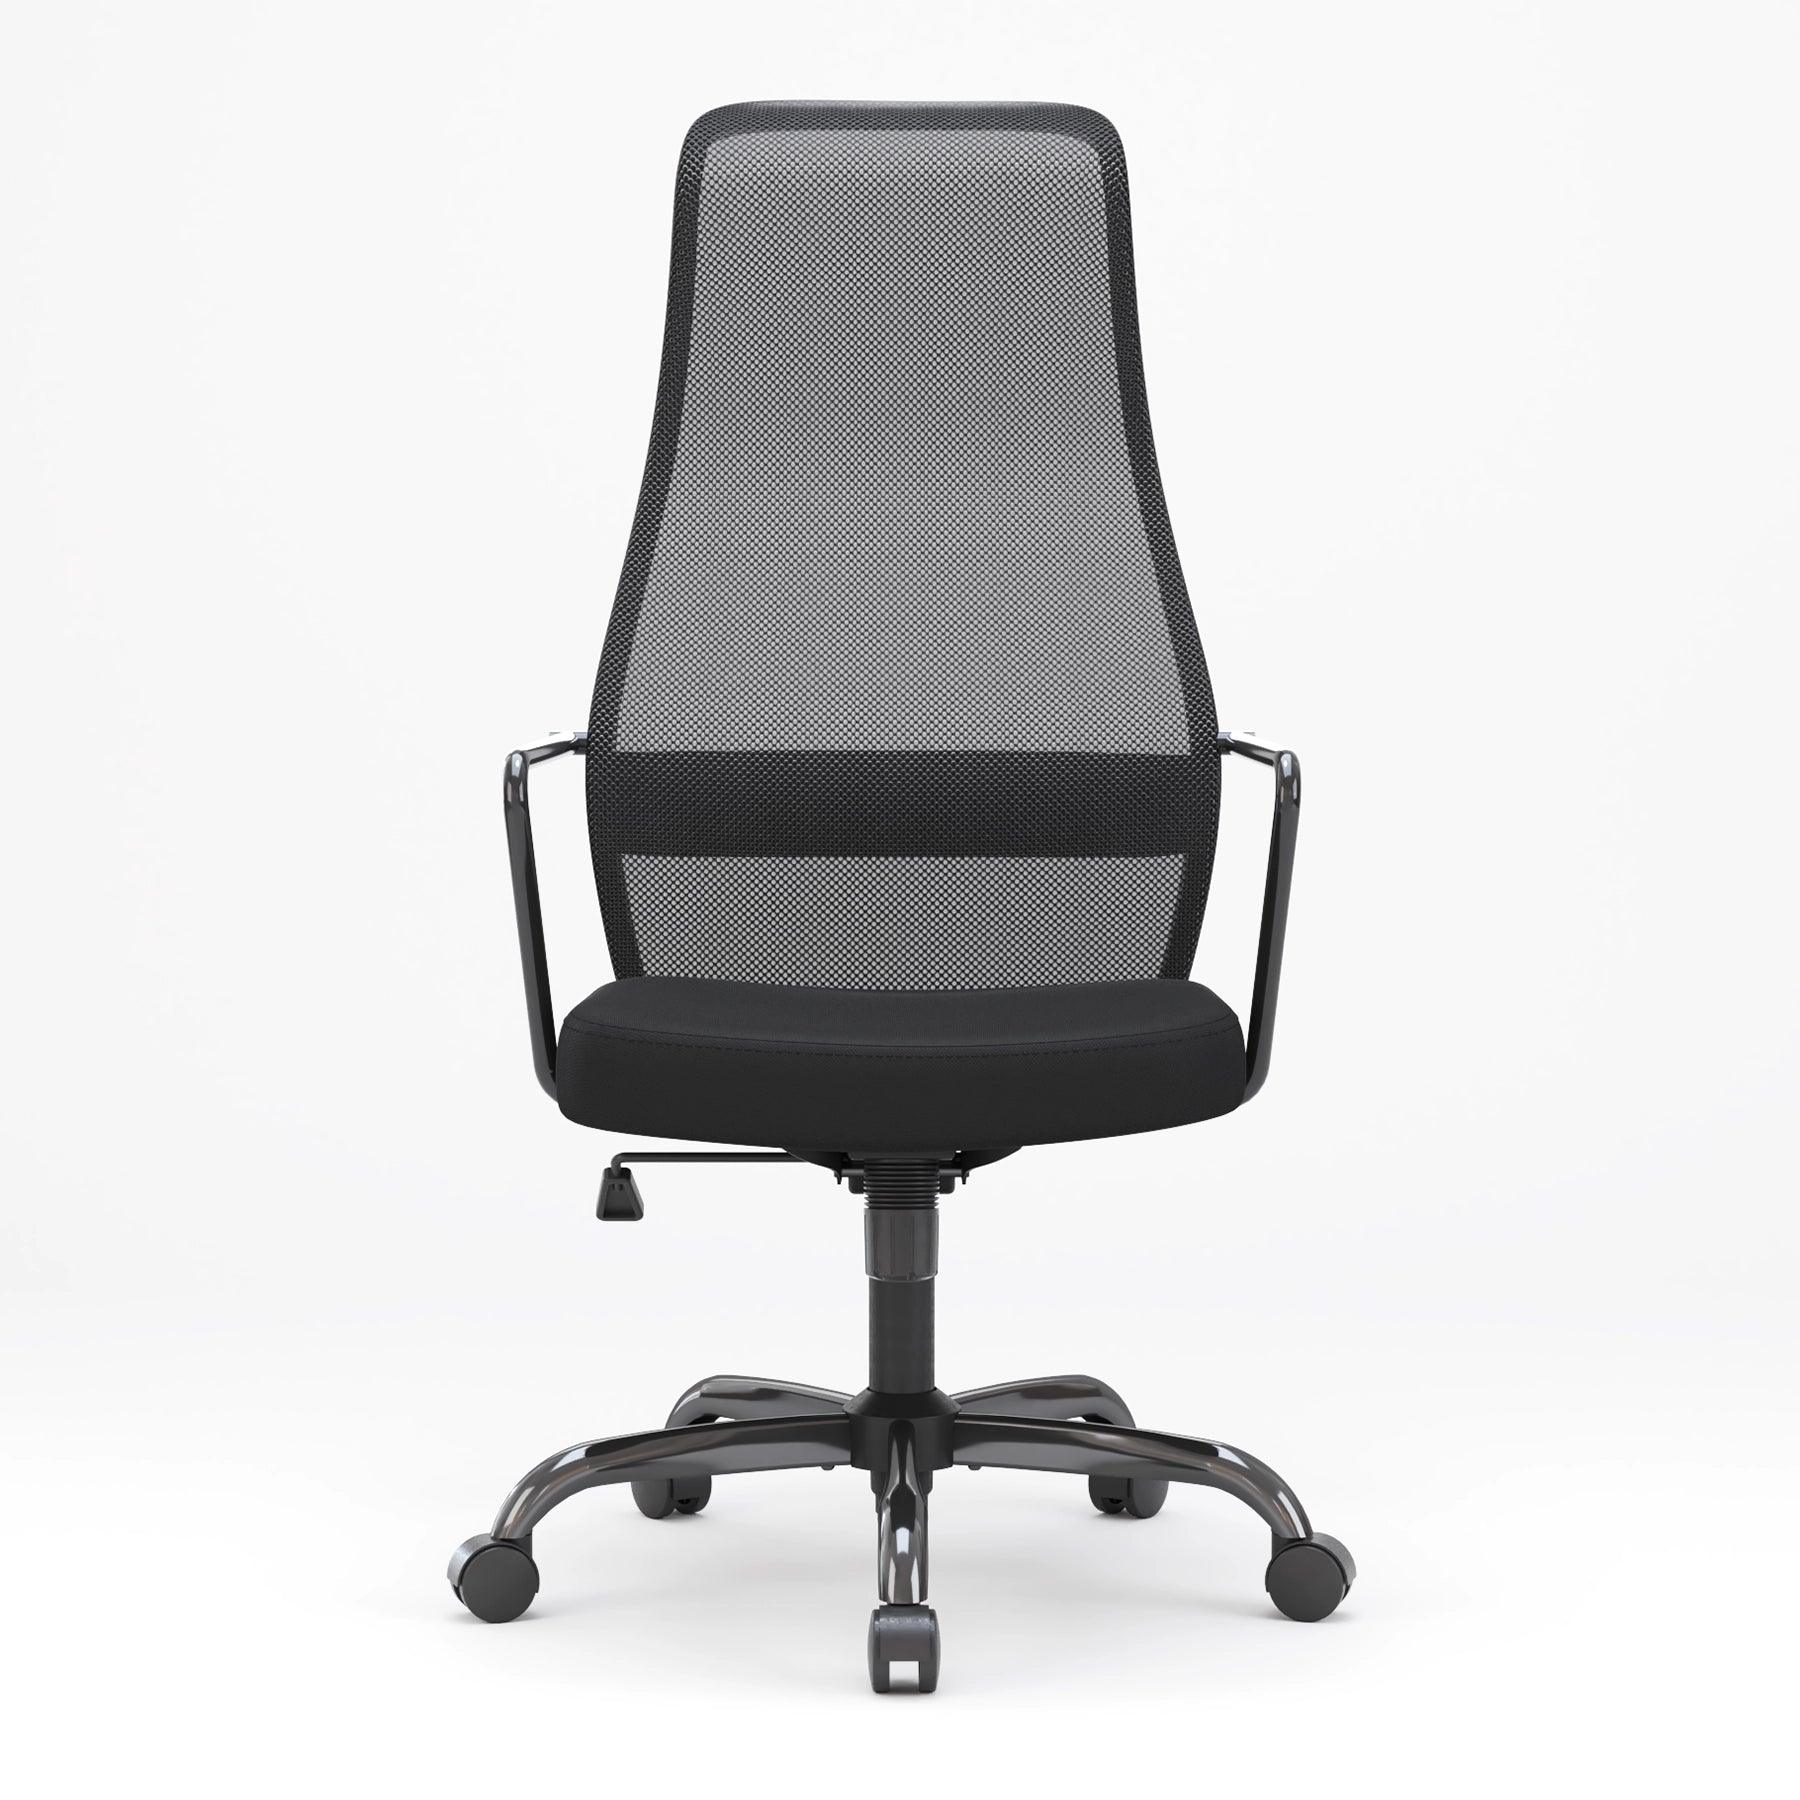 Sihoo M18 Ergo Chair: Unbeatable Comfort on a Budget! – PROSIT